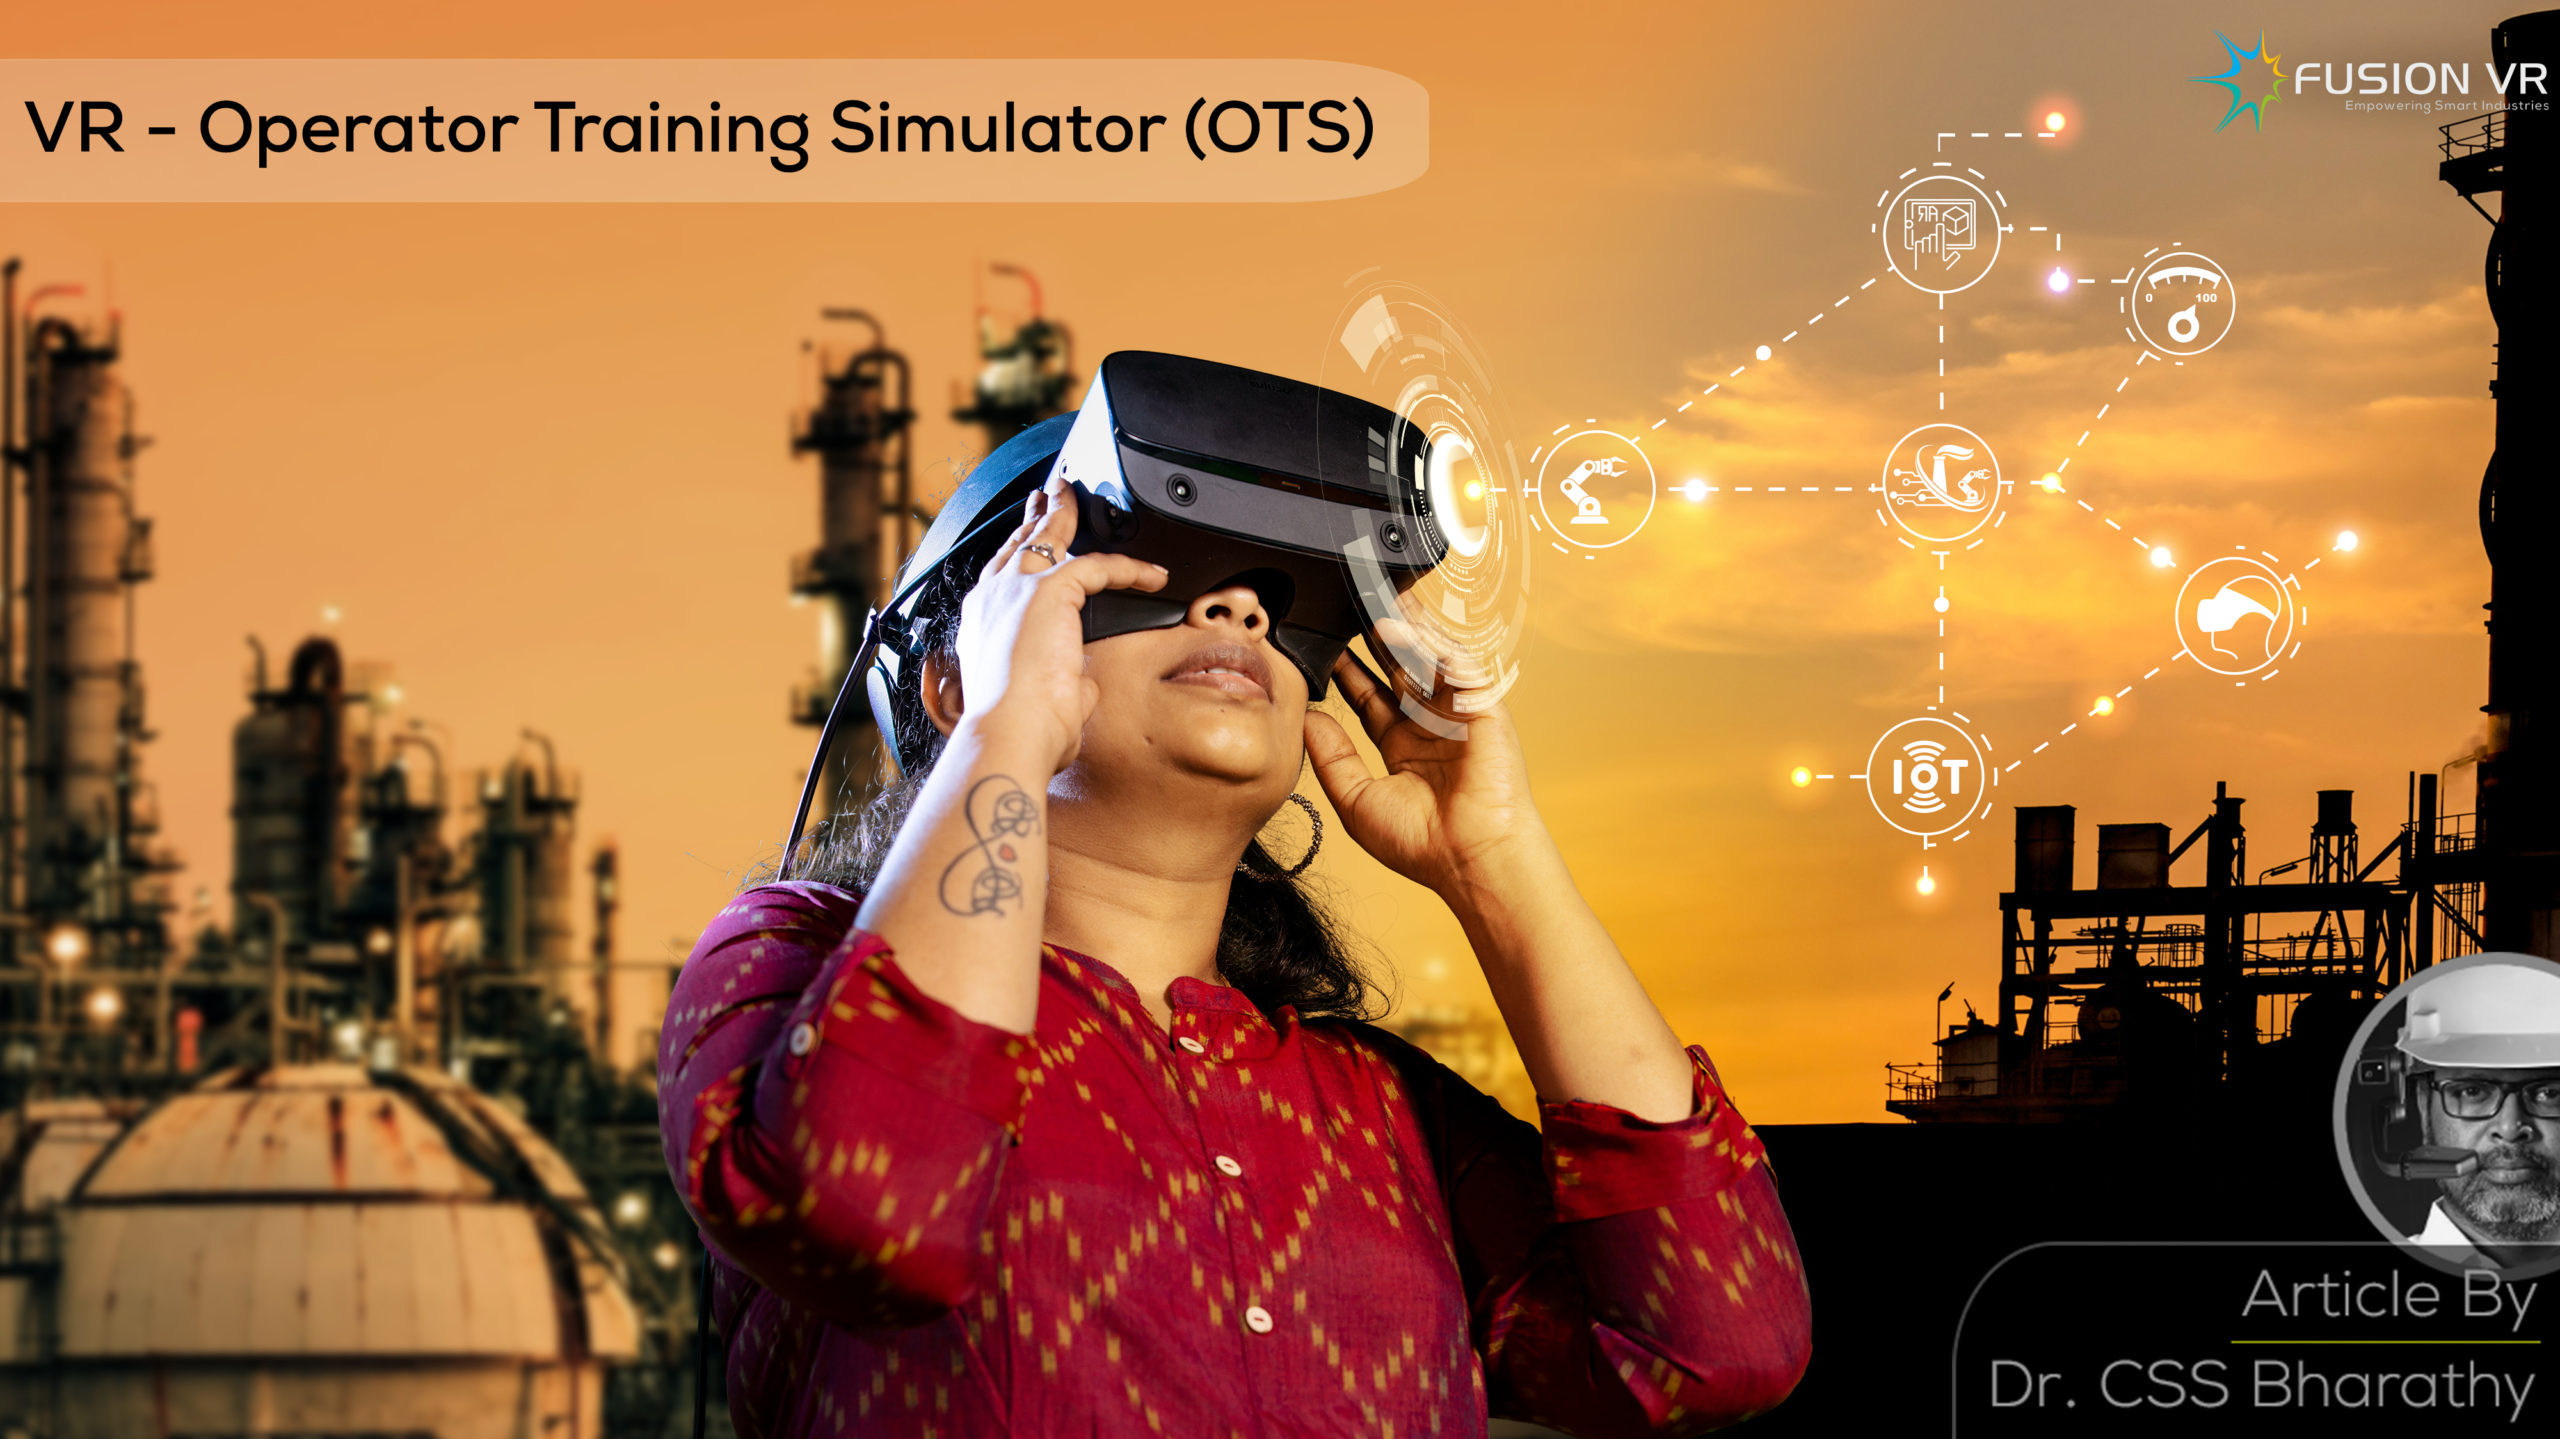 Hazardous Operations Training Simplified with FusionVR’s Operator Training (VR-OTS) Simulator